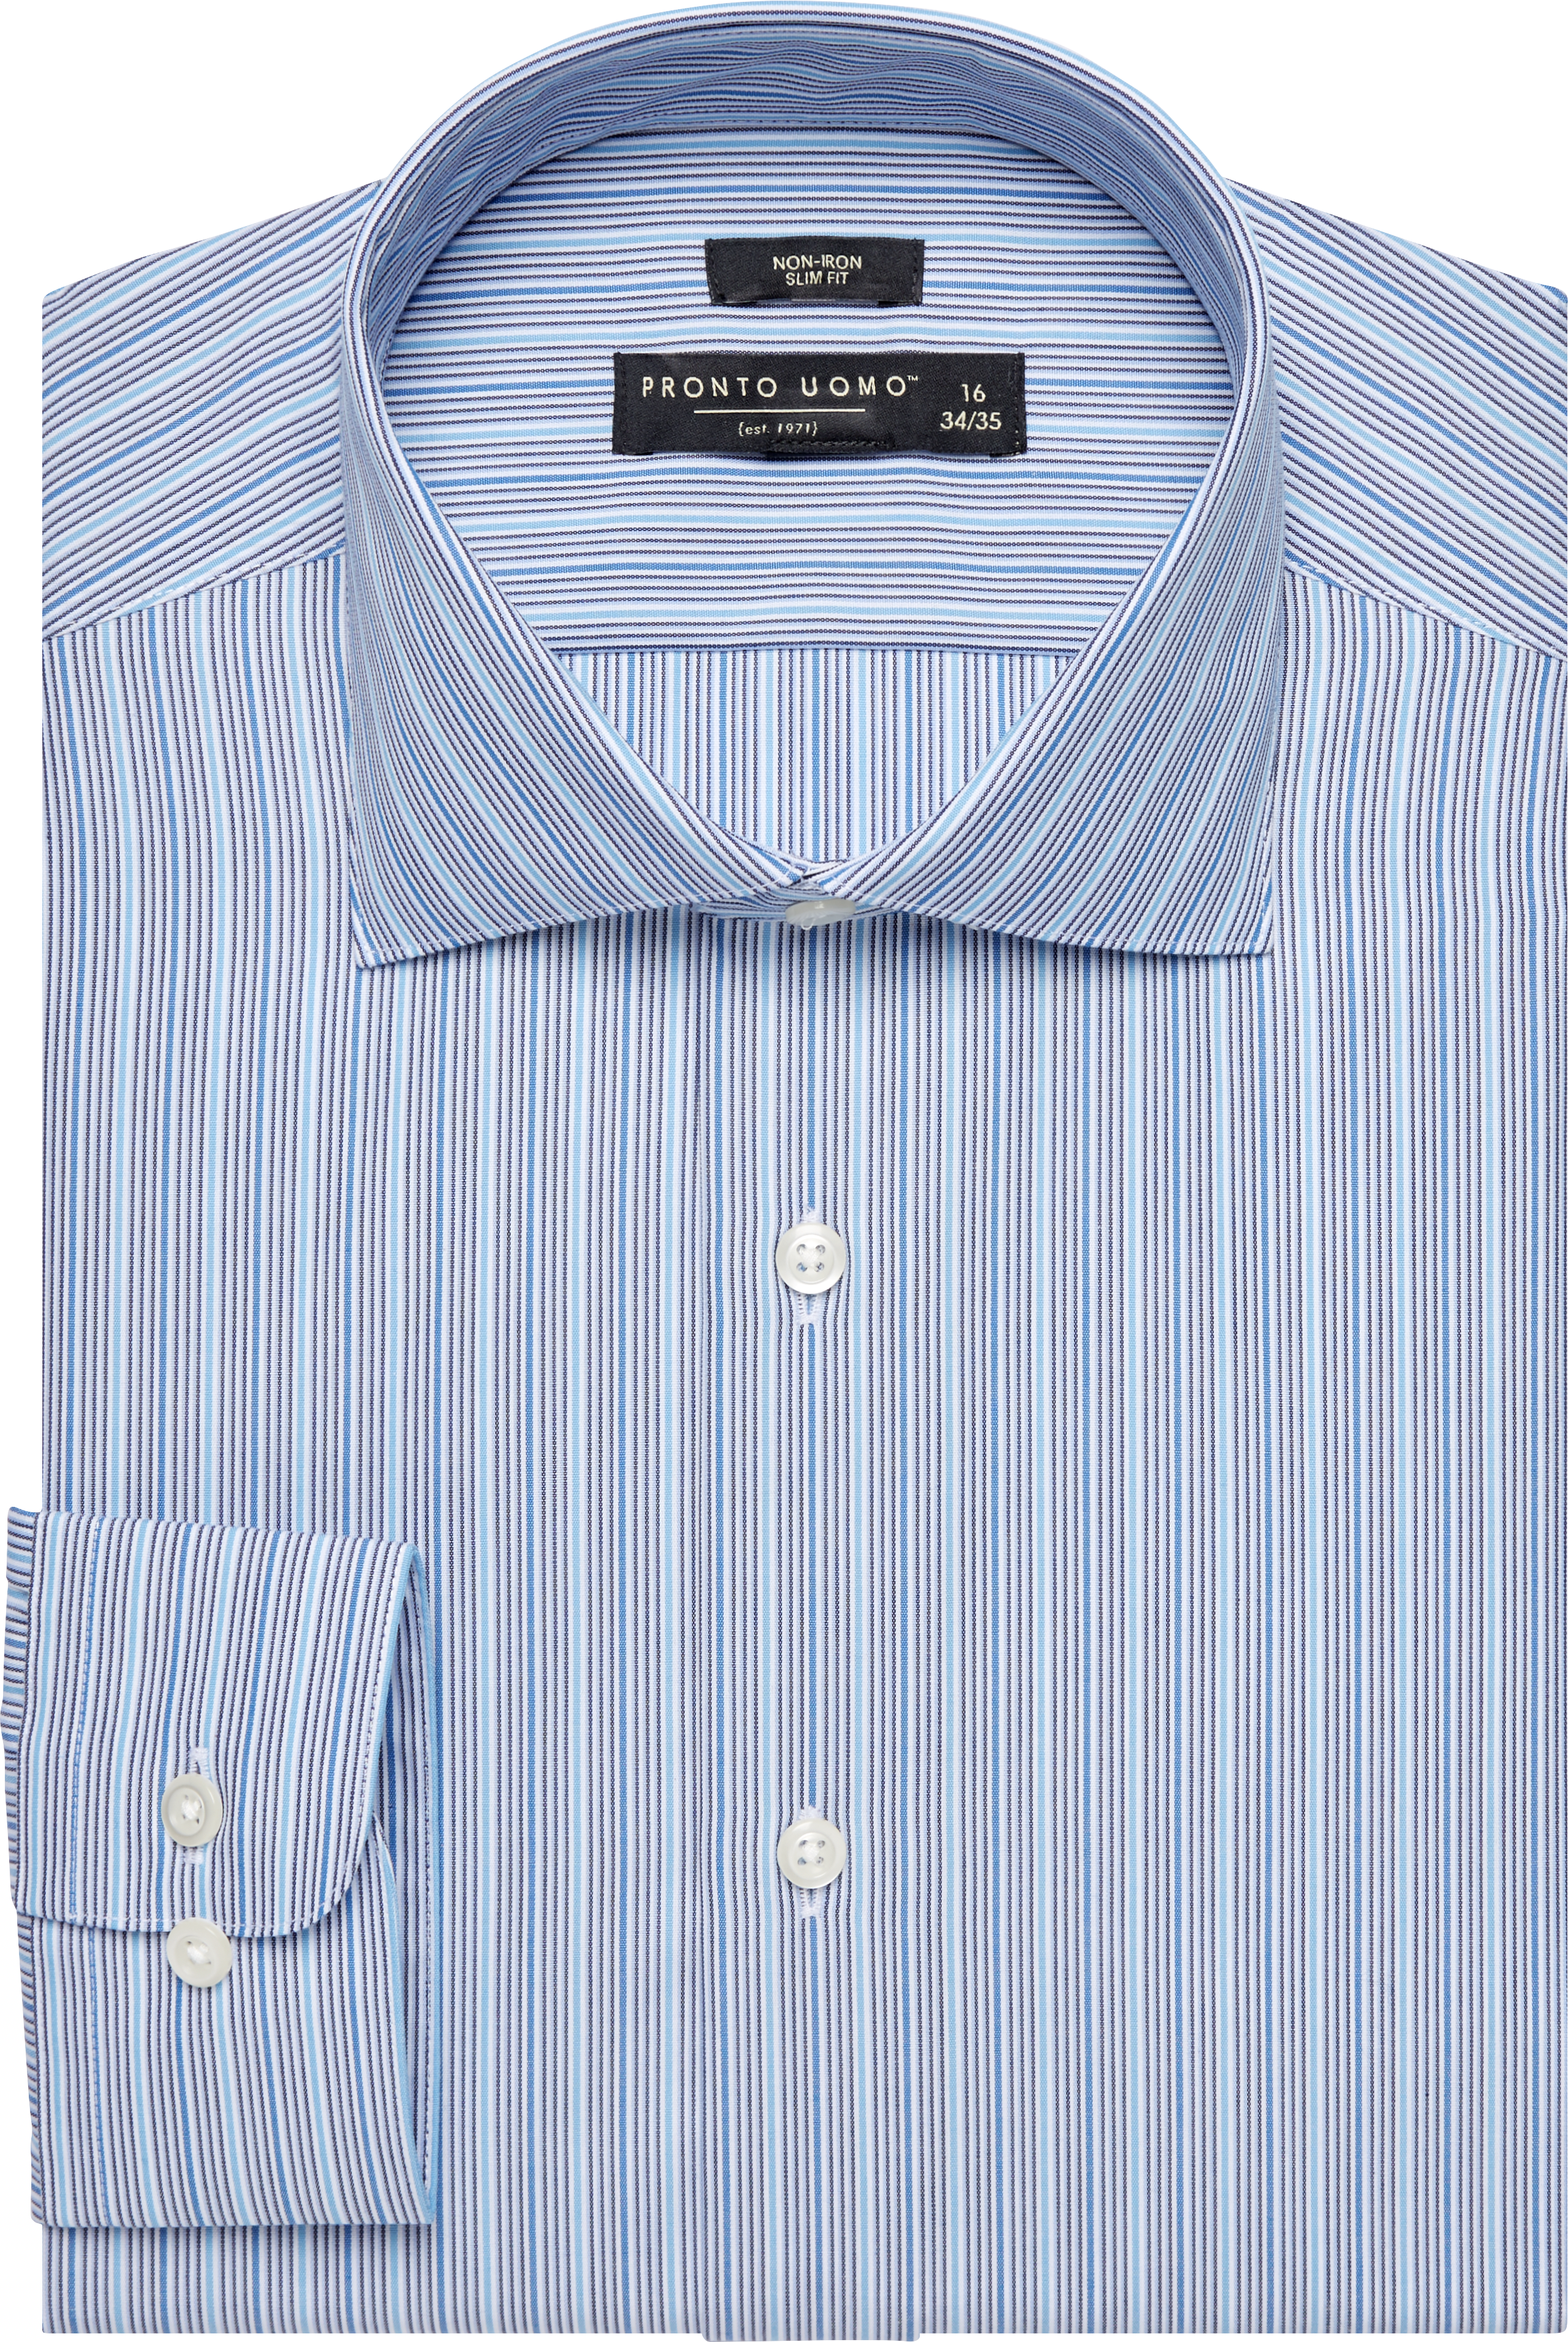 Pronto Uomo Blue Stripe Slim Fit Dress Shirt - Men's Sale | Men's Wearhouse